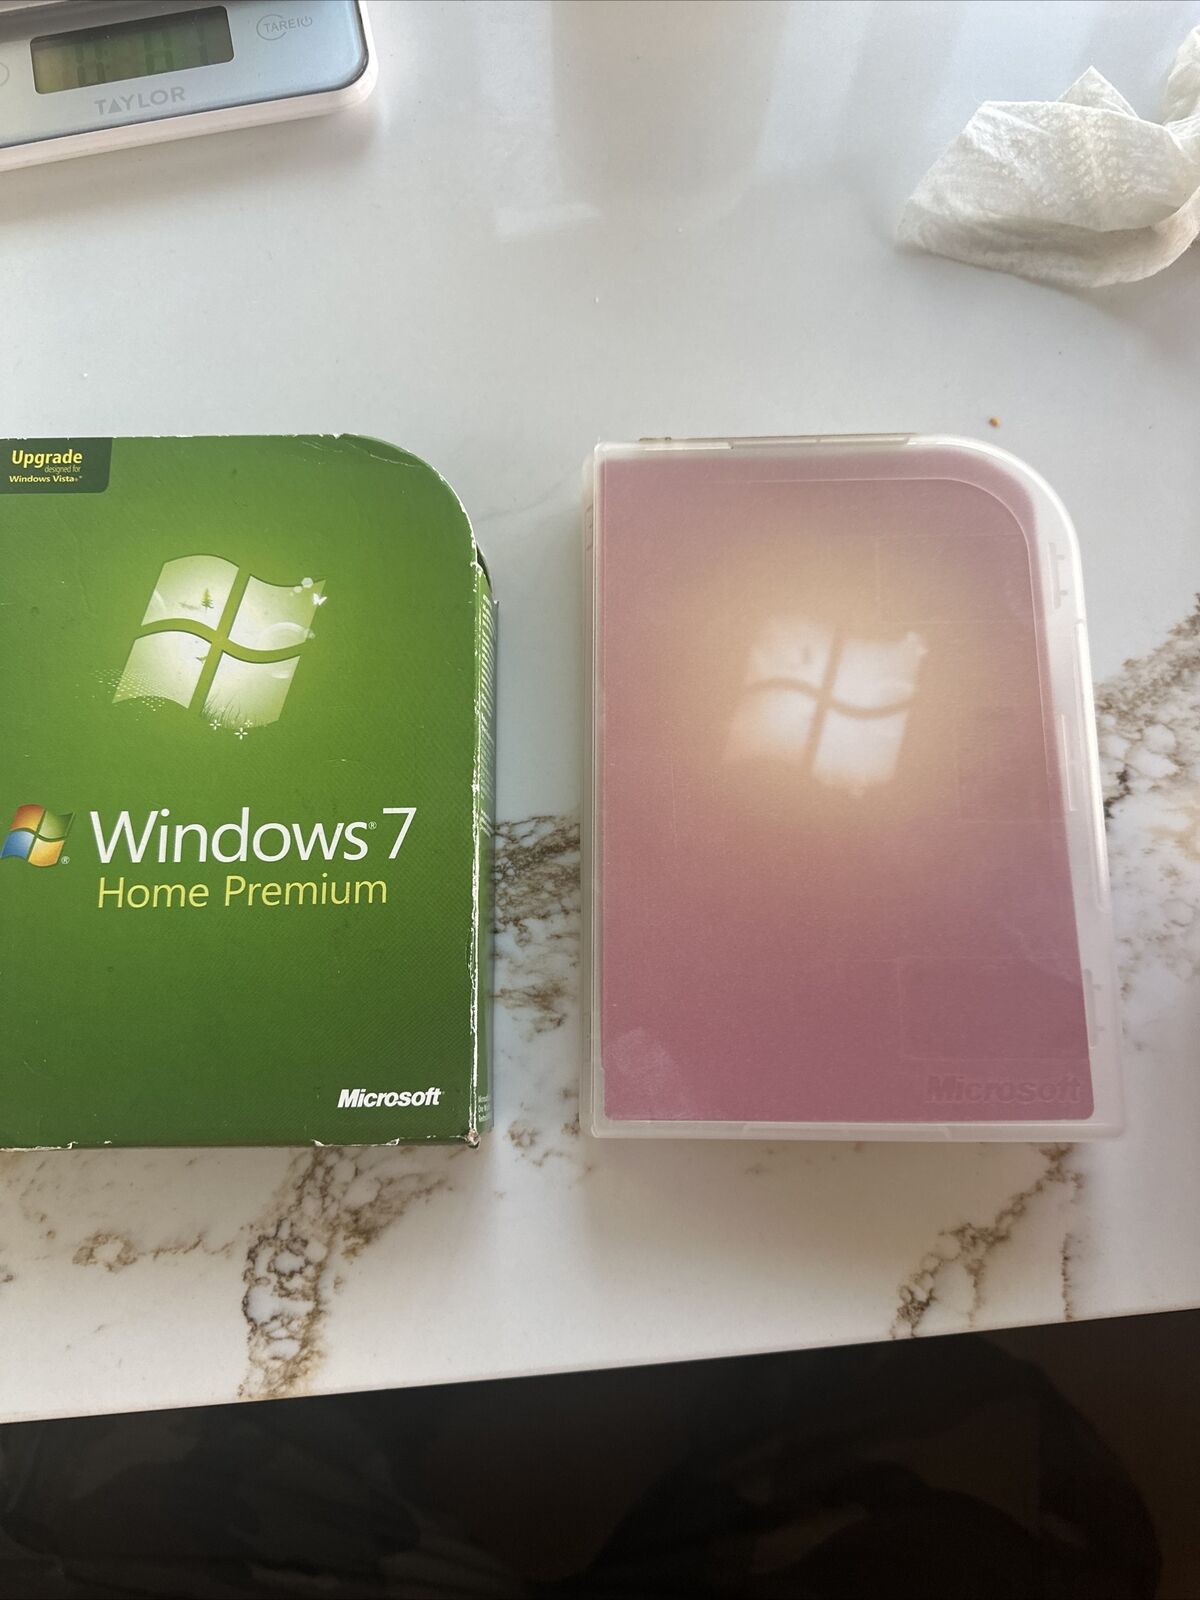 Microsoft Windows 7 Home Premium - Upgrade 32 & 64-Bit discs -  Retail Box